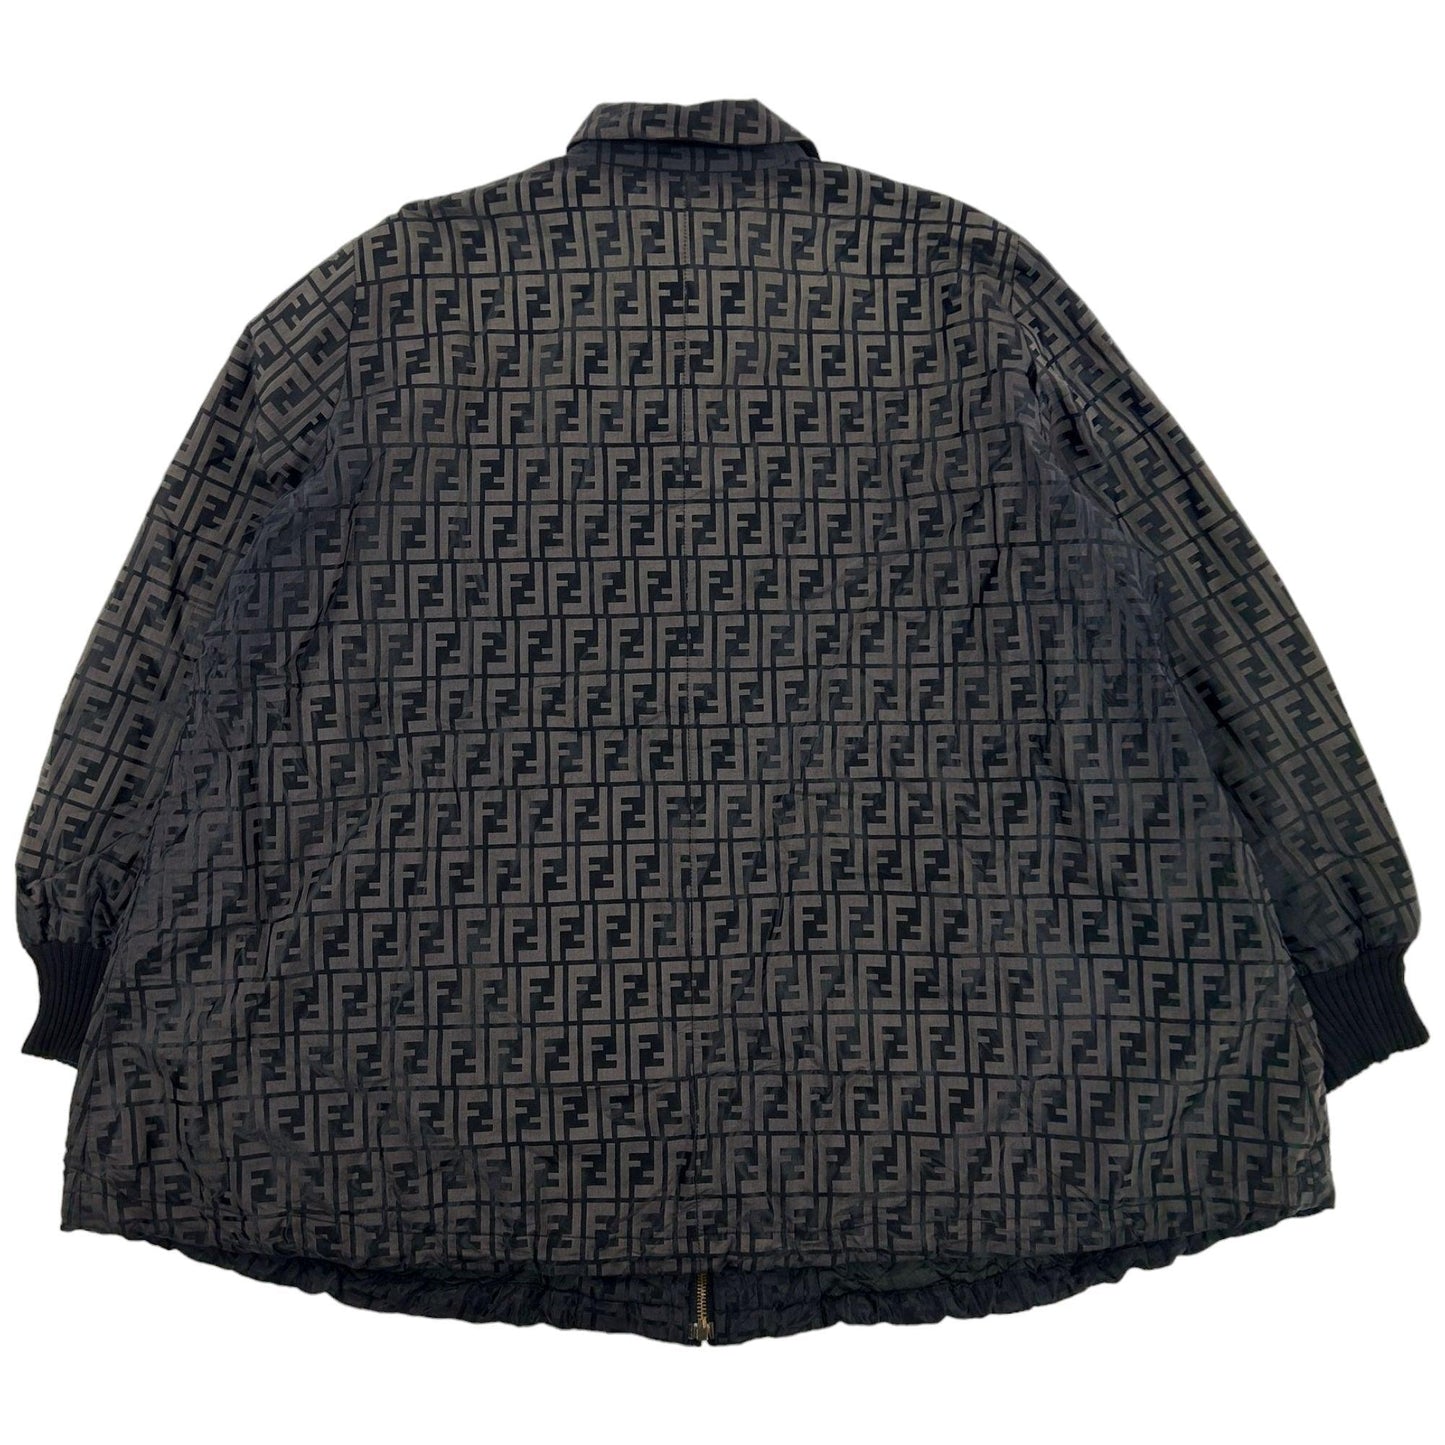 Vintage Fendi Monogram Jacket Size L - Known Source